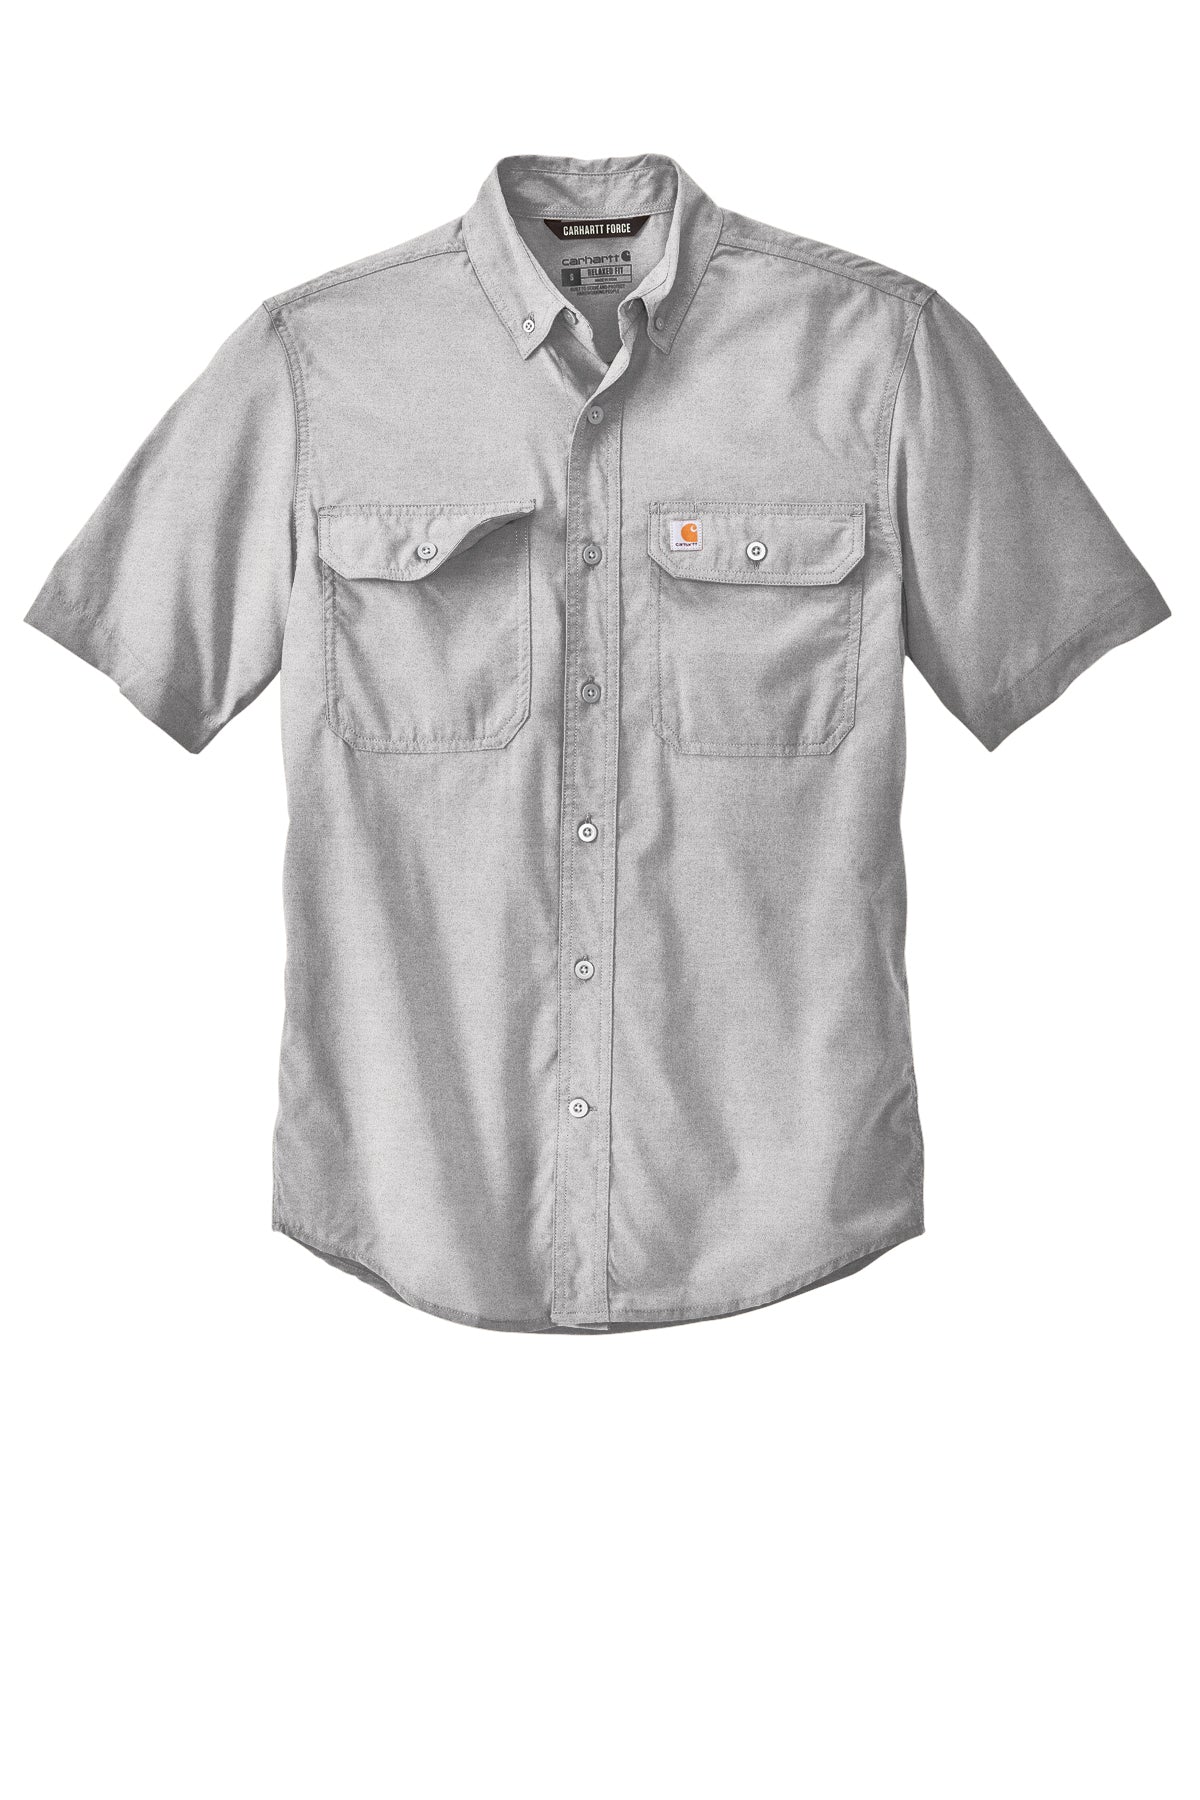 Carhartt Force Solid Long Sleeve Shirt Dark Khaki / 2x